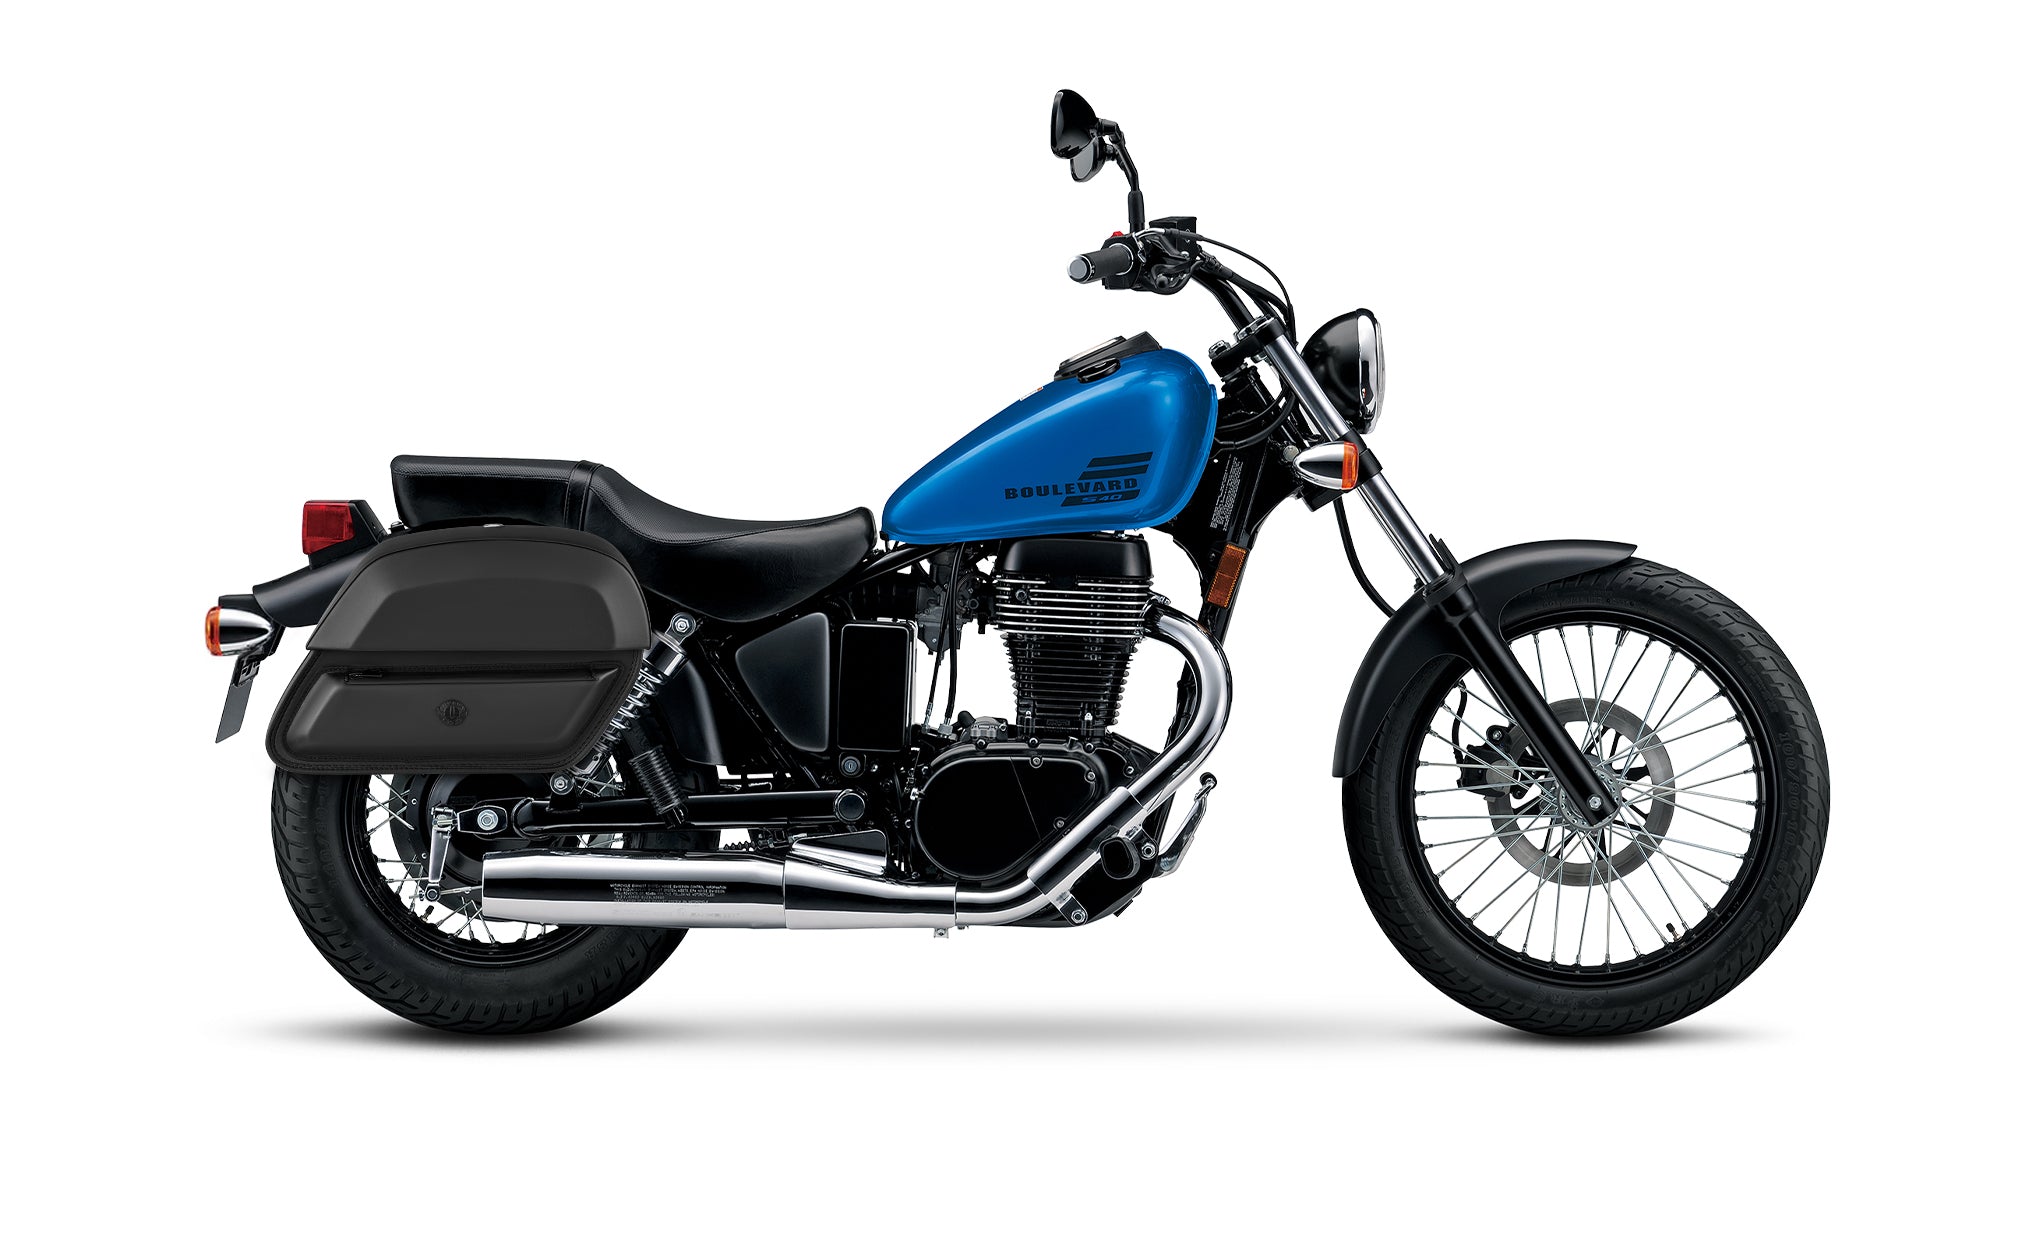 28L - Wraith Medium Boulevard S40 Savage LS650 Leather Motorcycle Saddlebags BAG on Bike View @expand